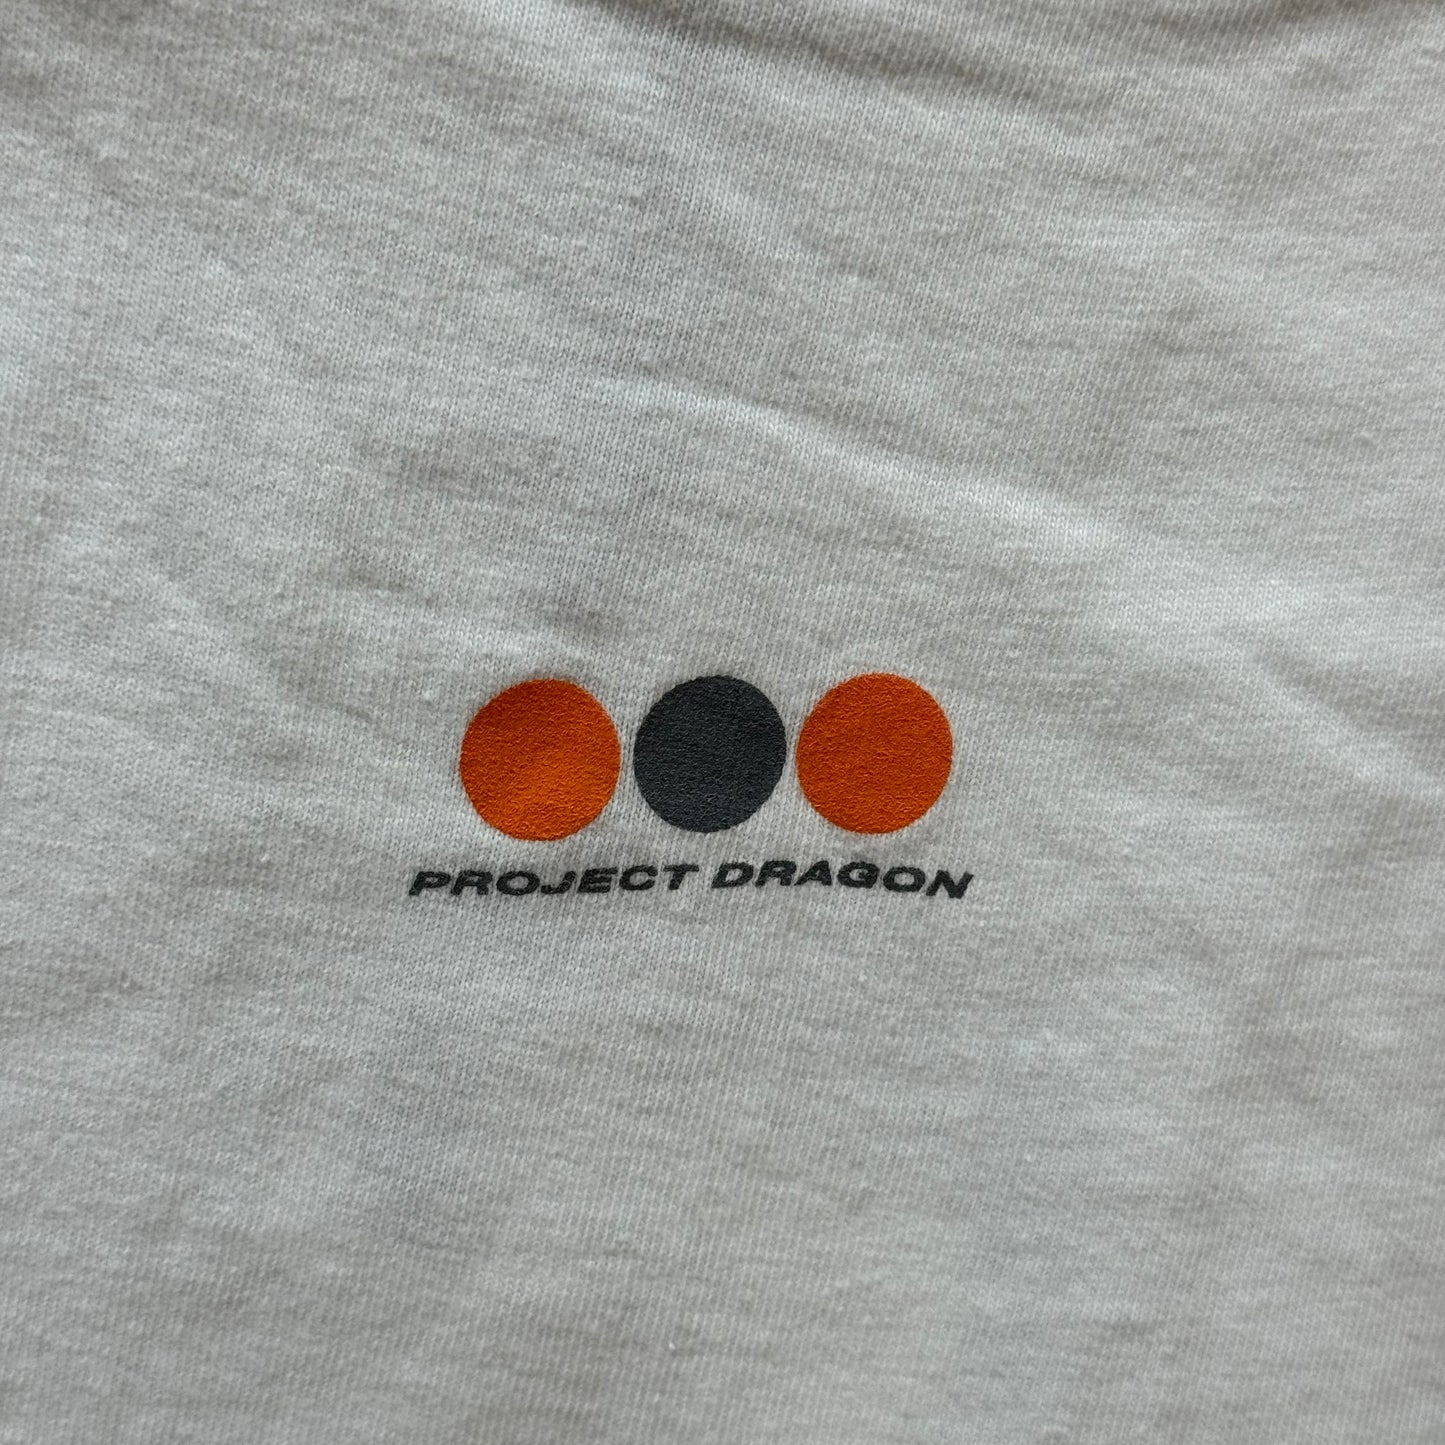 Vintage Project Dragon Futura White T-shirt